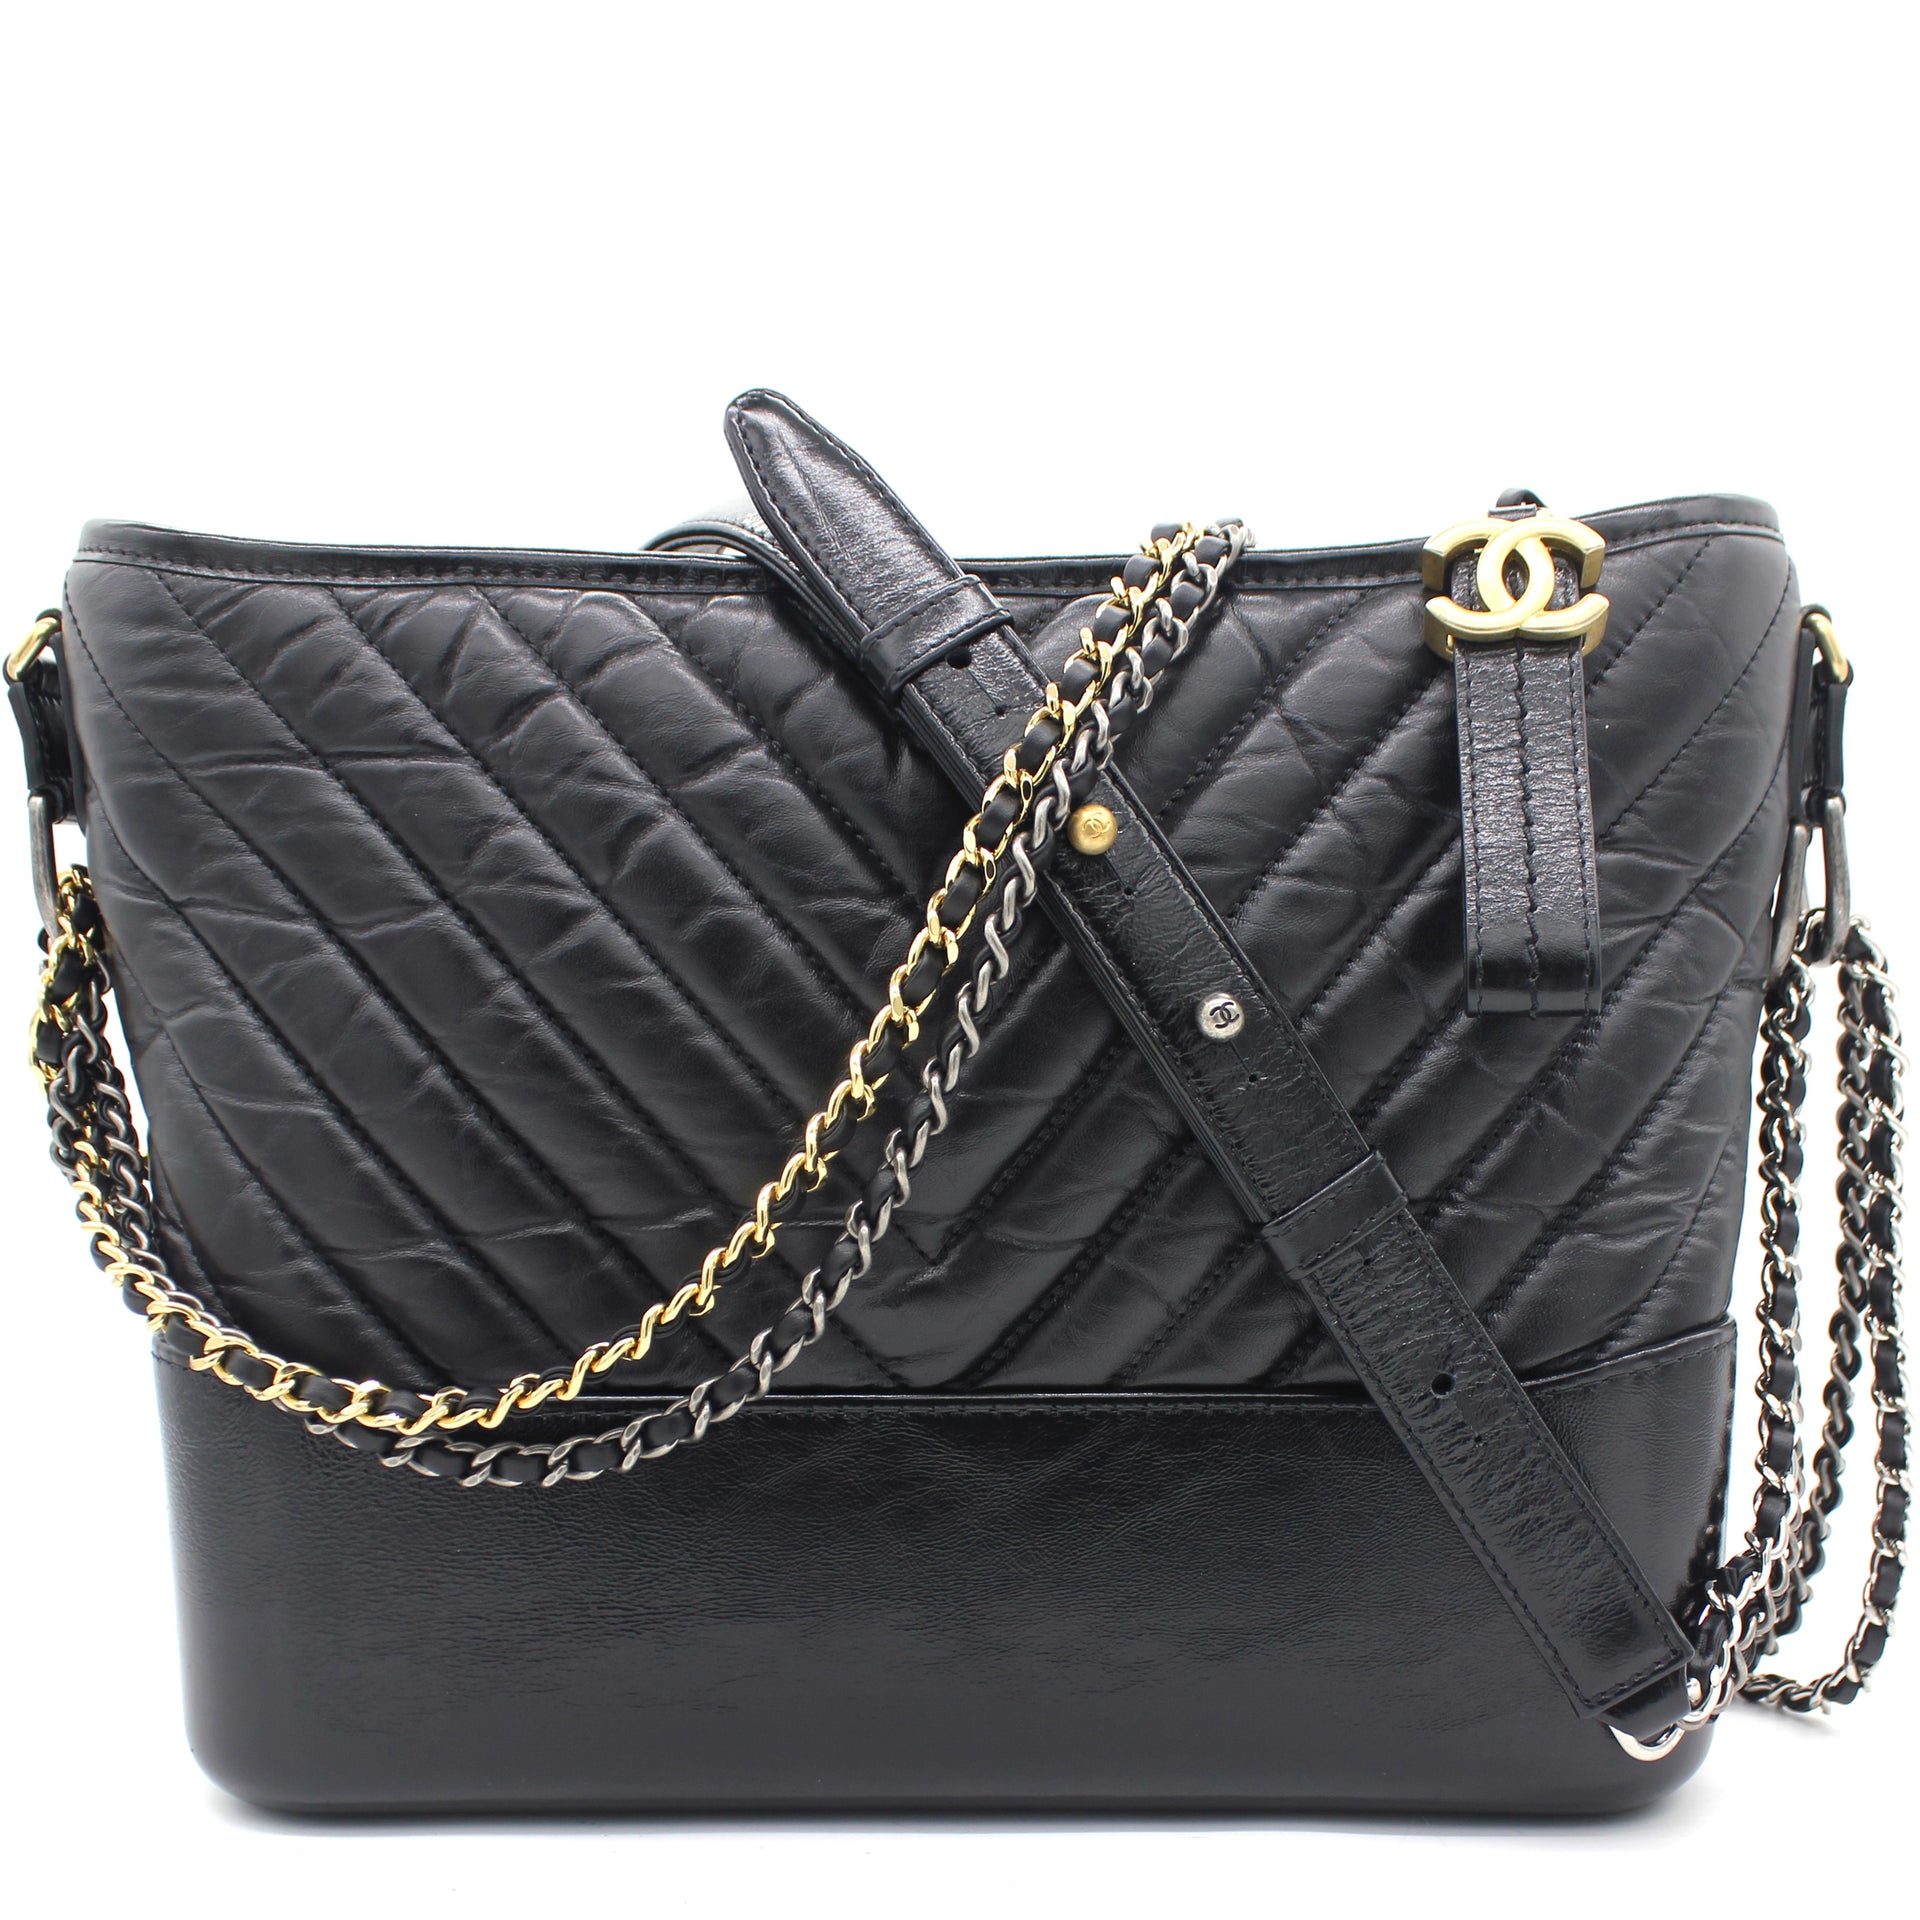 CHANEL, Bags, Chanel Medium Gabrielle Hobo Bag